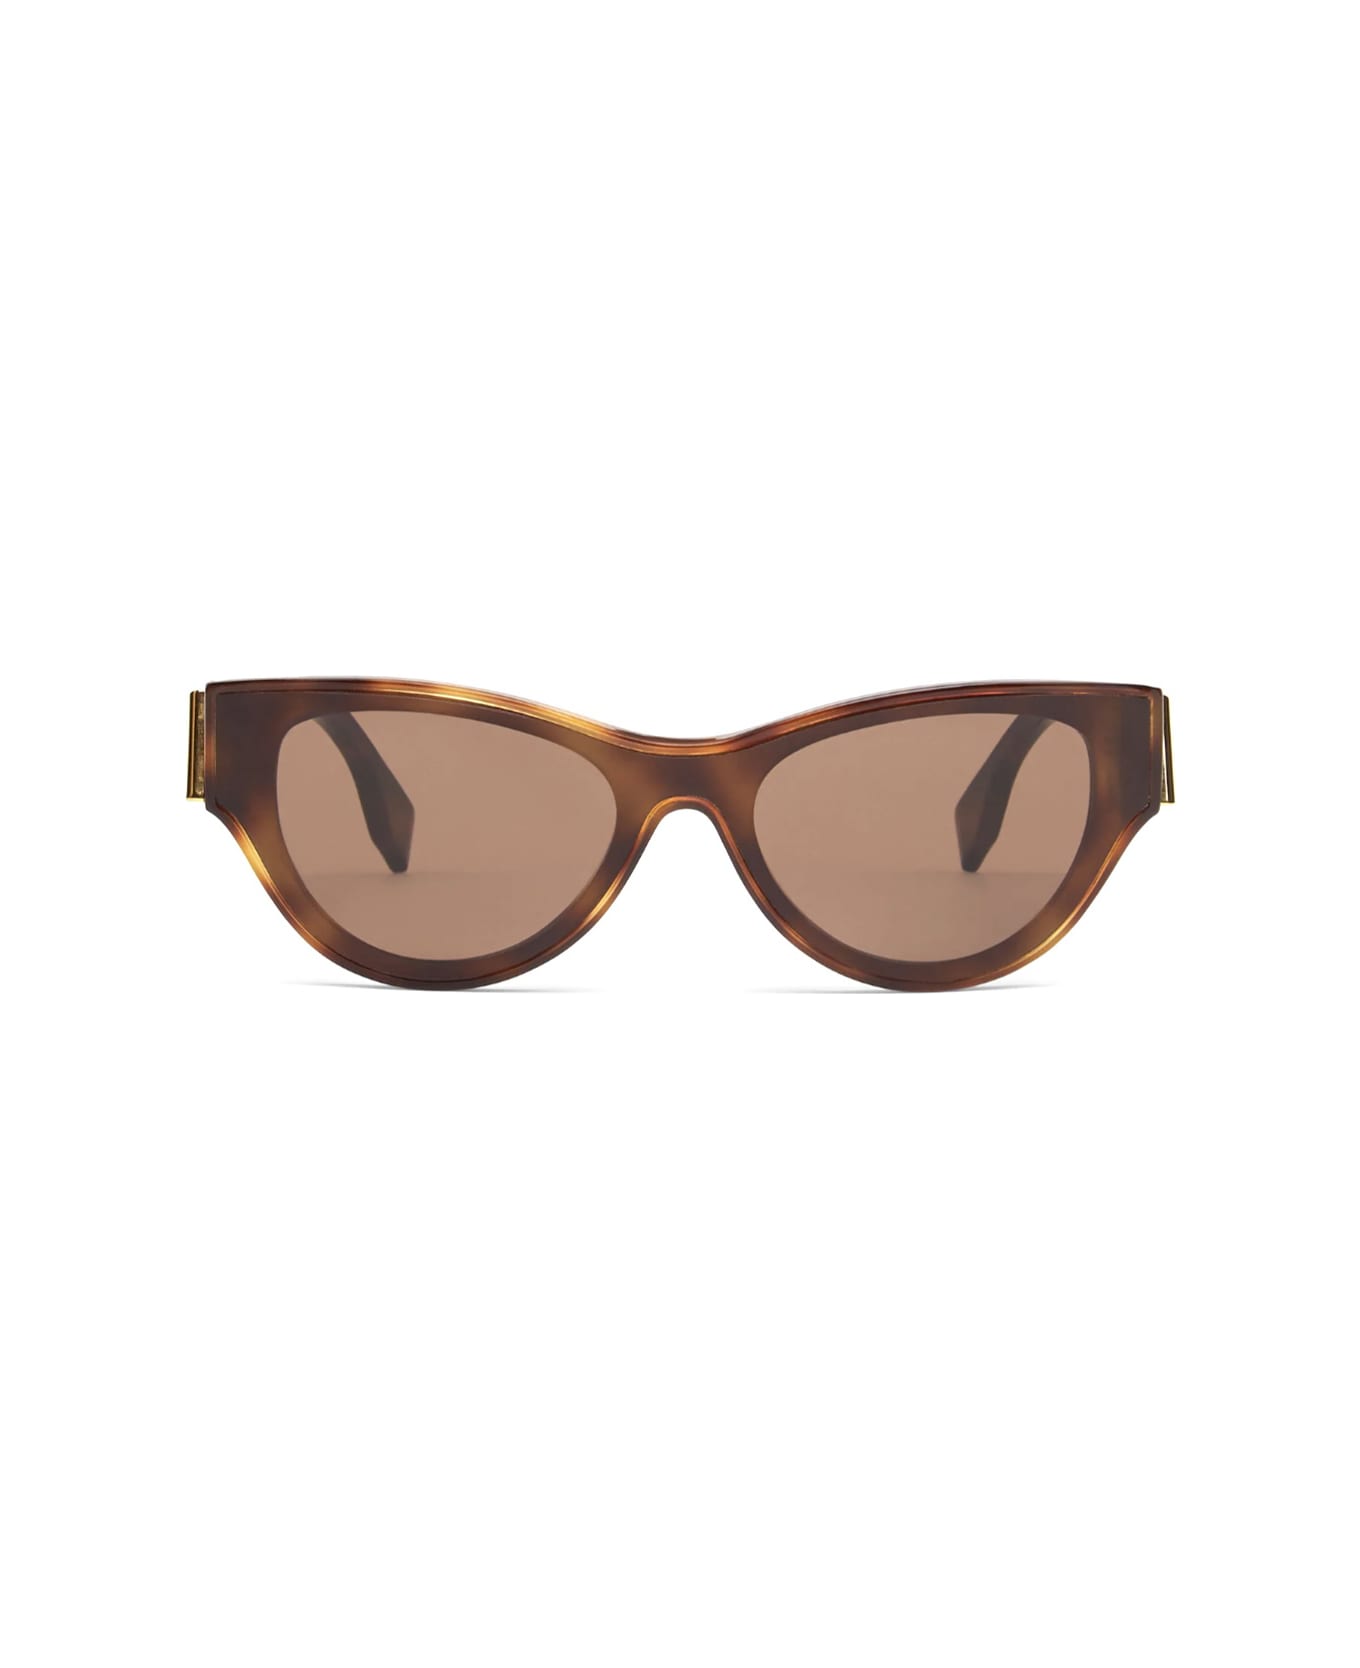 Fendi Eyewear Fe40135i 53e Sunglasses - Marrone サングラス